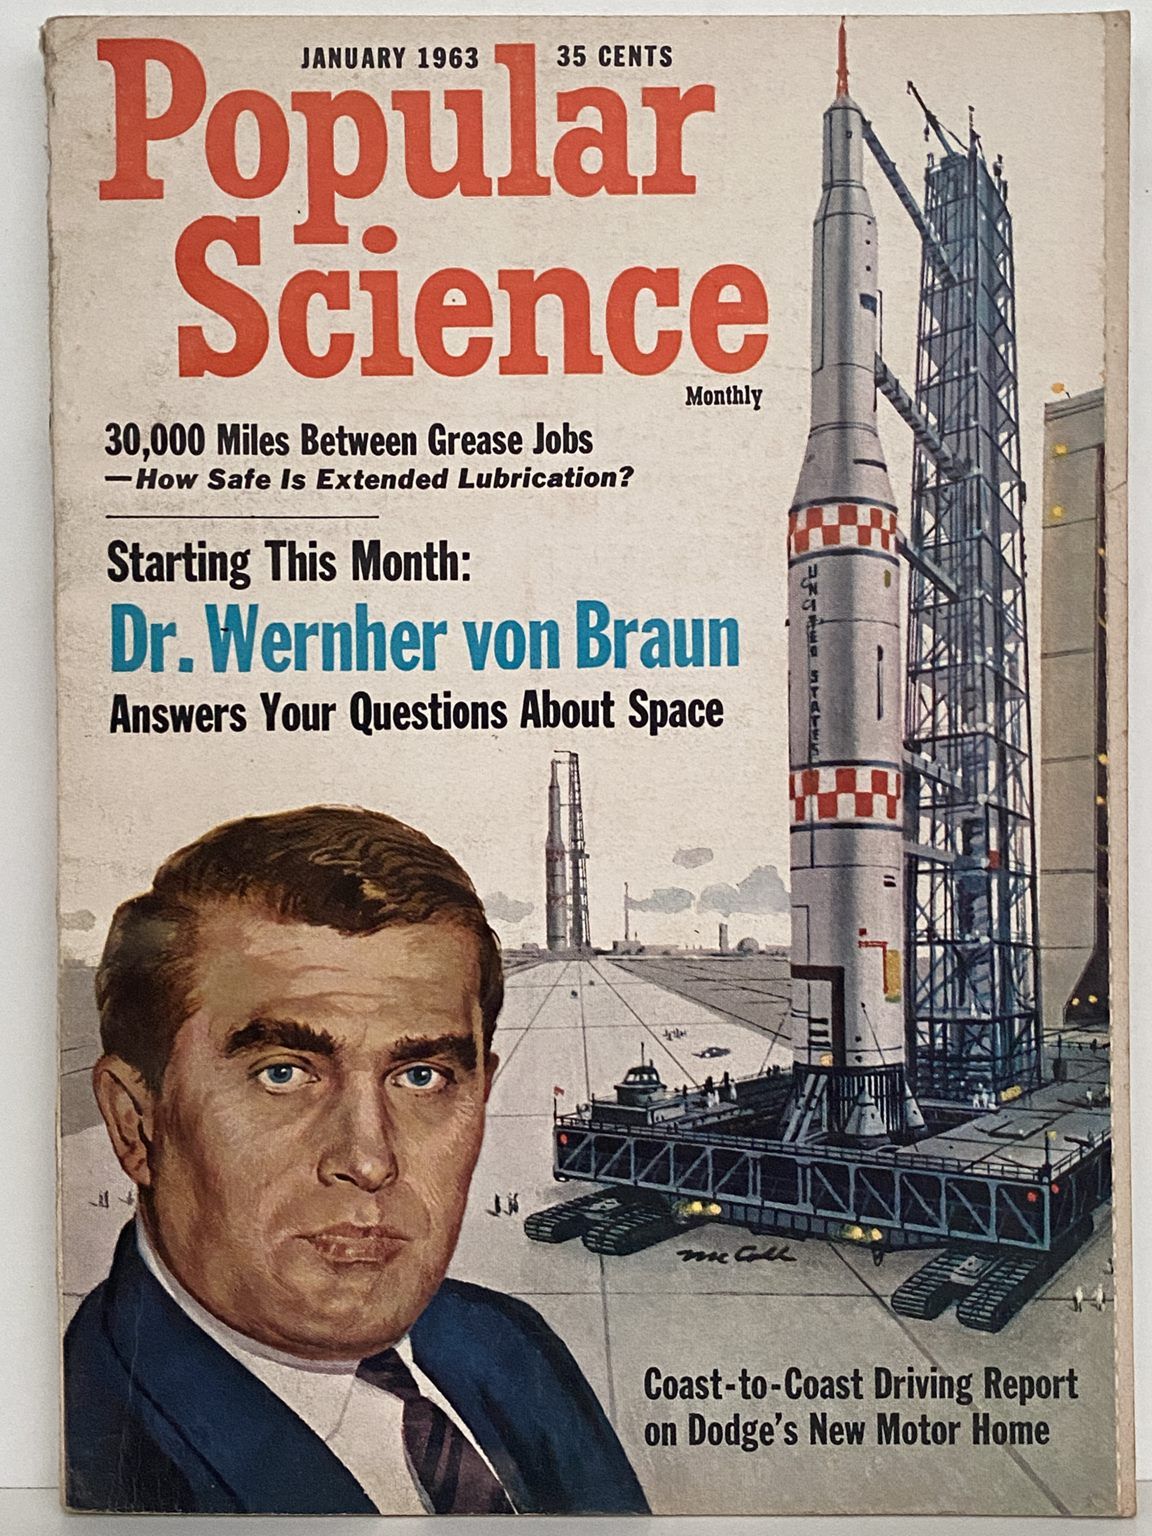 VINTAGE MAGAZINE: Popular Science, Vol. 182, No. 1 - January 1963